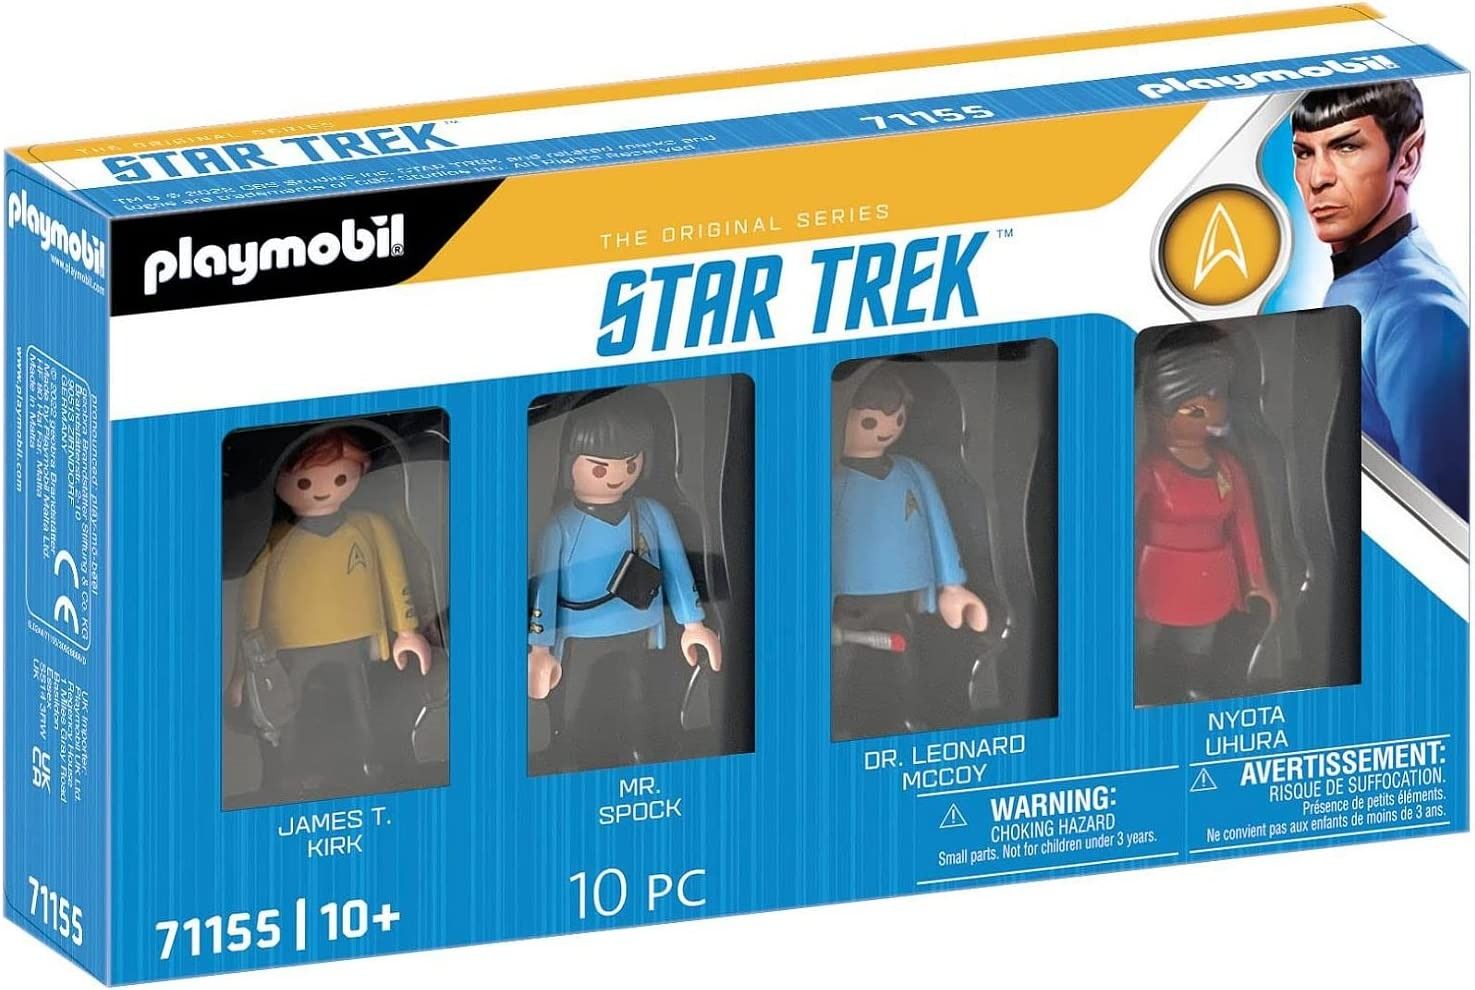 PLAYMOBIL Star Trek Figures Set